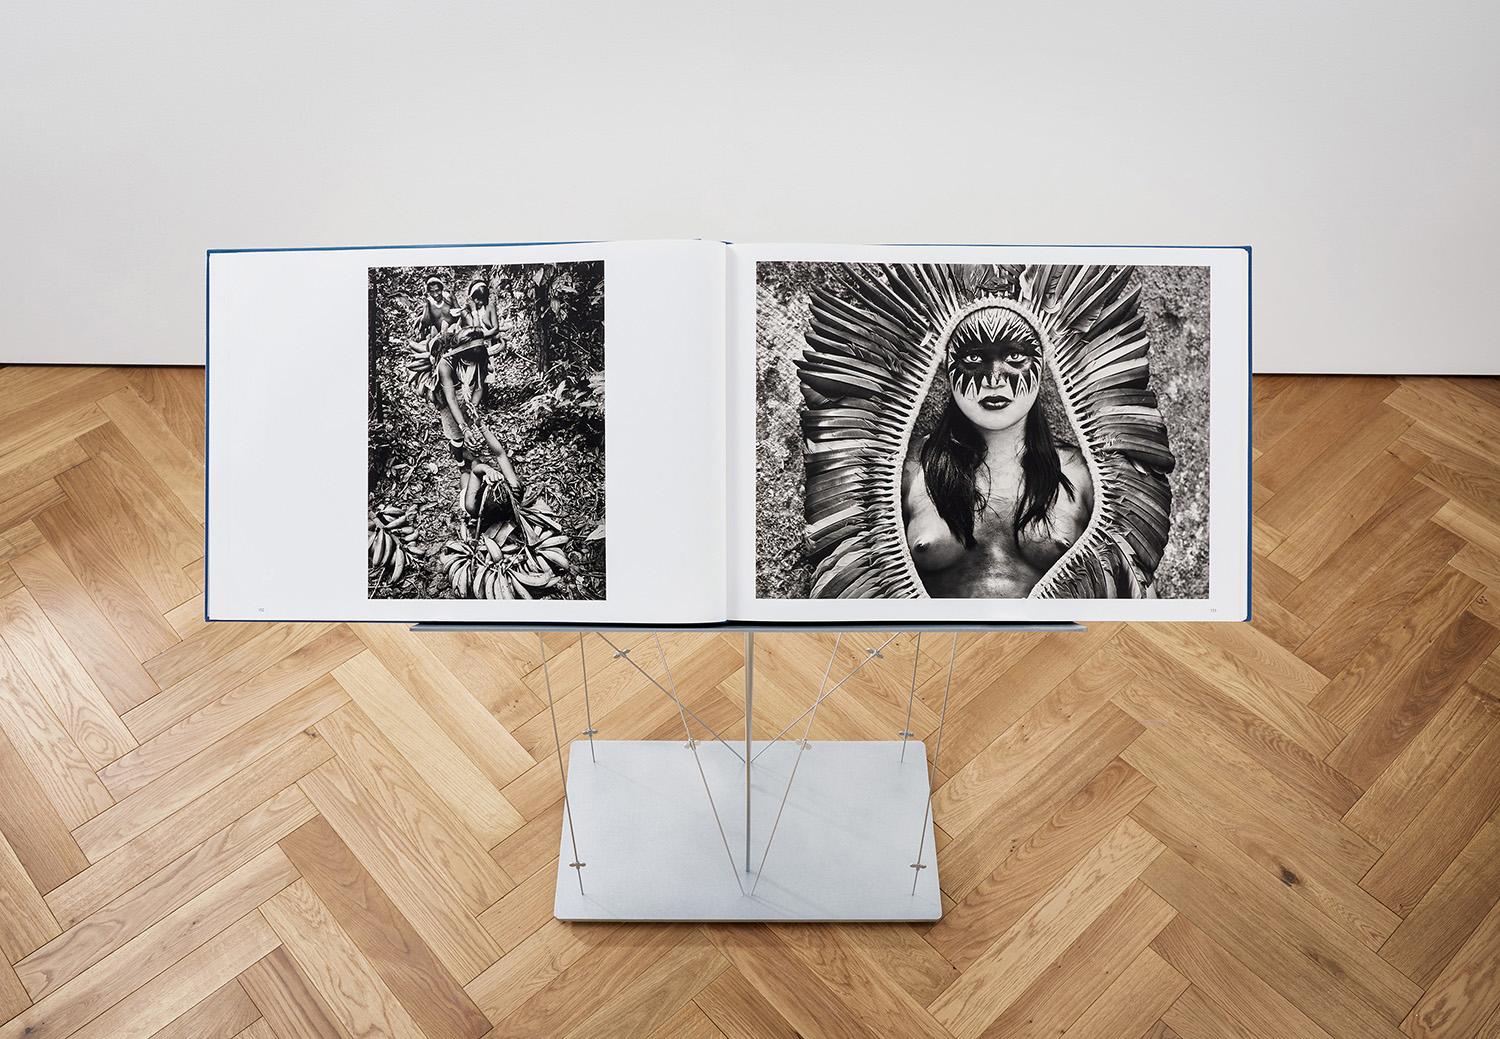 Steel Sebastião Salgado, Amazônia, Signed Sumo Book, Black & White Photographic Print For Sale